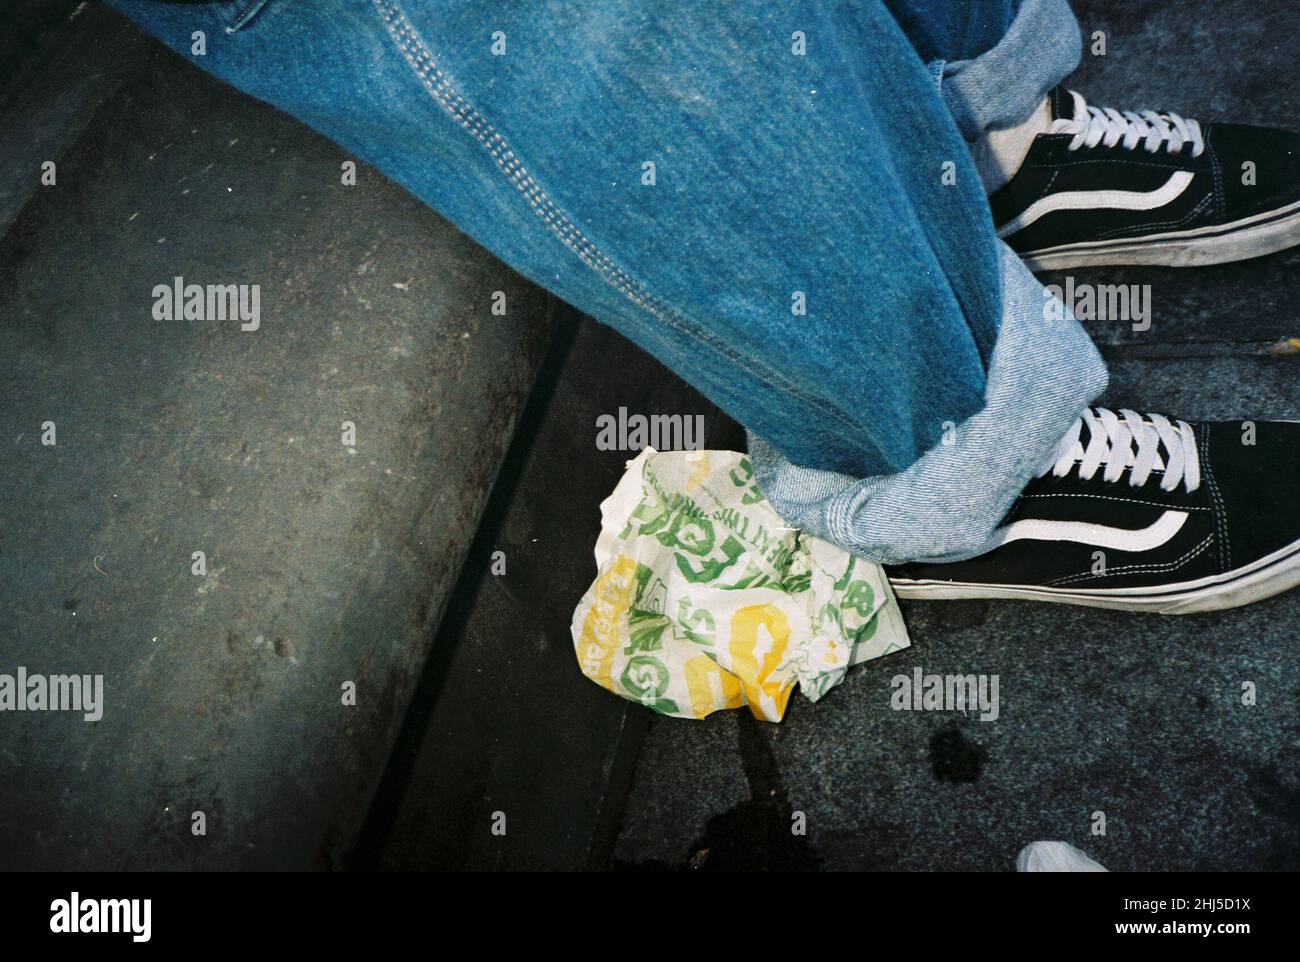 New York, NY, USA. 6th Nov, 2021. Young men wearing Vans shoes skateboard  and ride BMX bikes in Washington Square, JaÃ¢â‚¬""¹n. 26, 2022, NYC.  (Credit Image: © John Marshall Mantel/ZUMA Press Wire